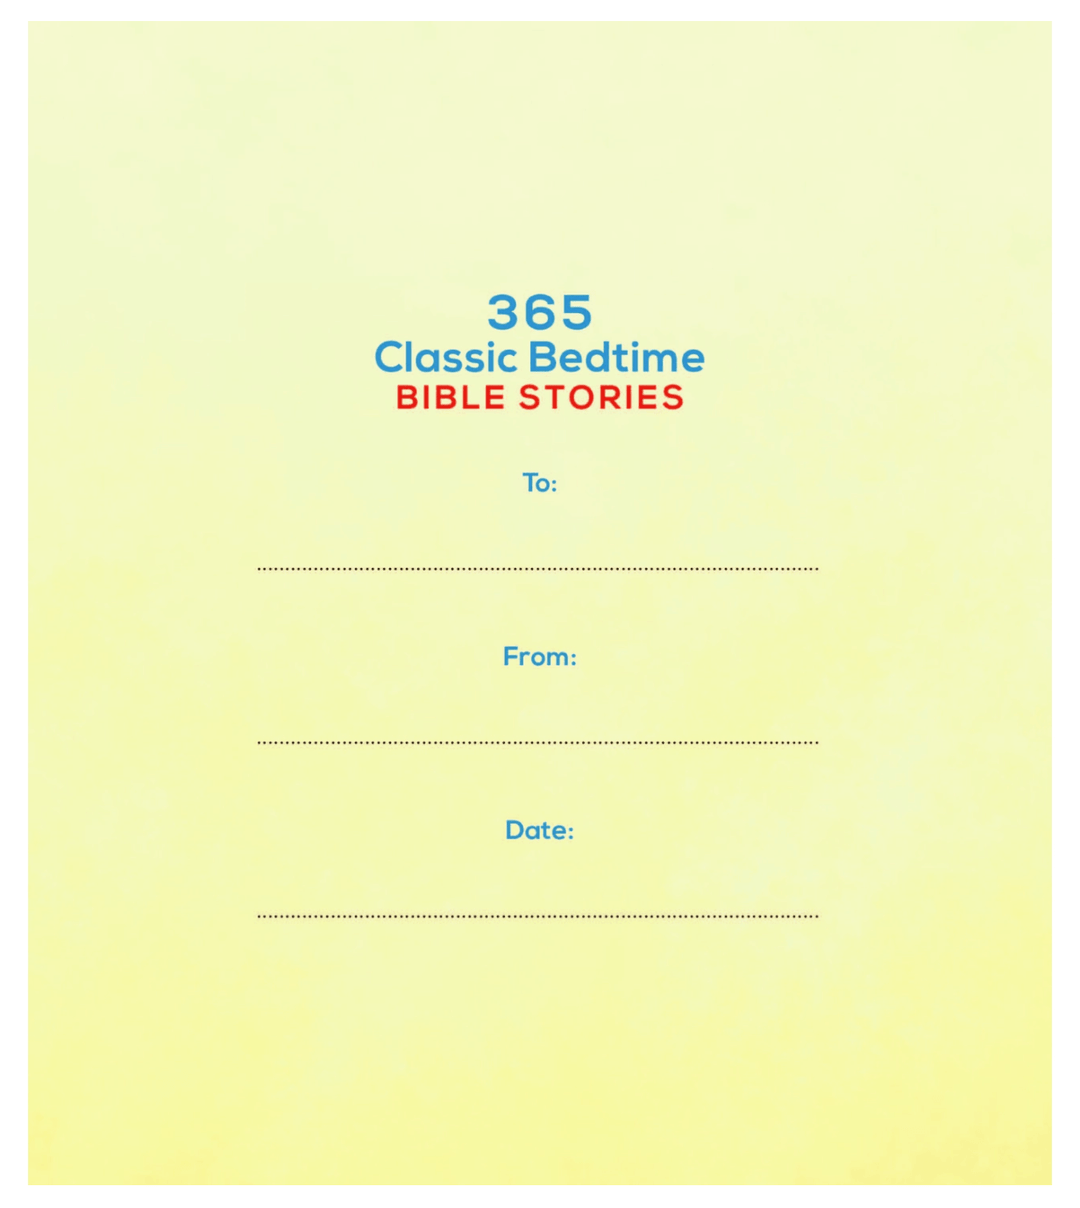 365 Classic Bedtime Bible Stories